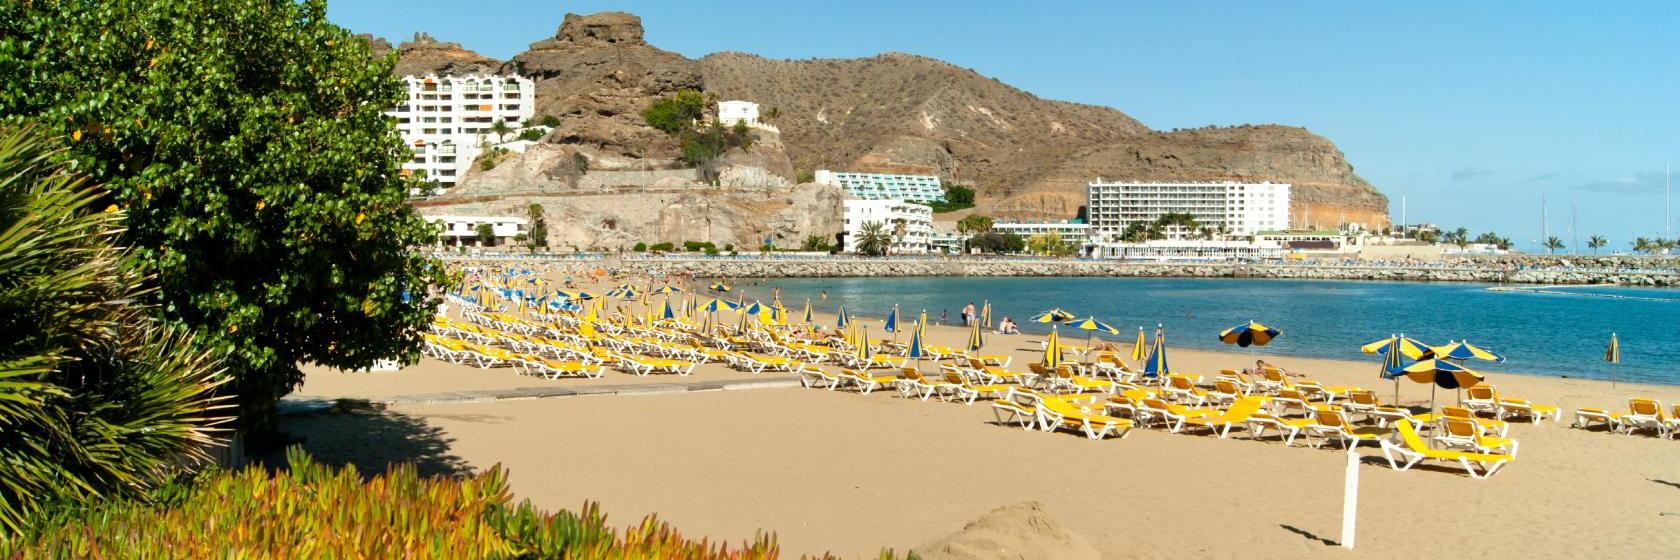 10 Best Puerto Rico de Gran Canaria Hotels, Spain (From $49)